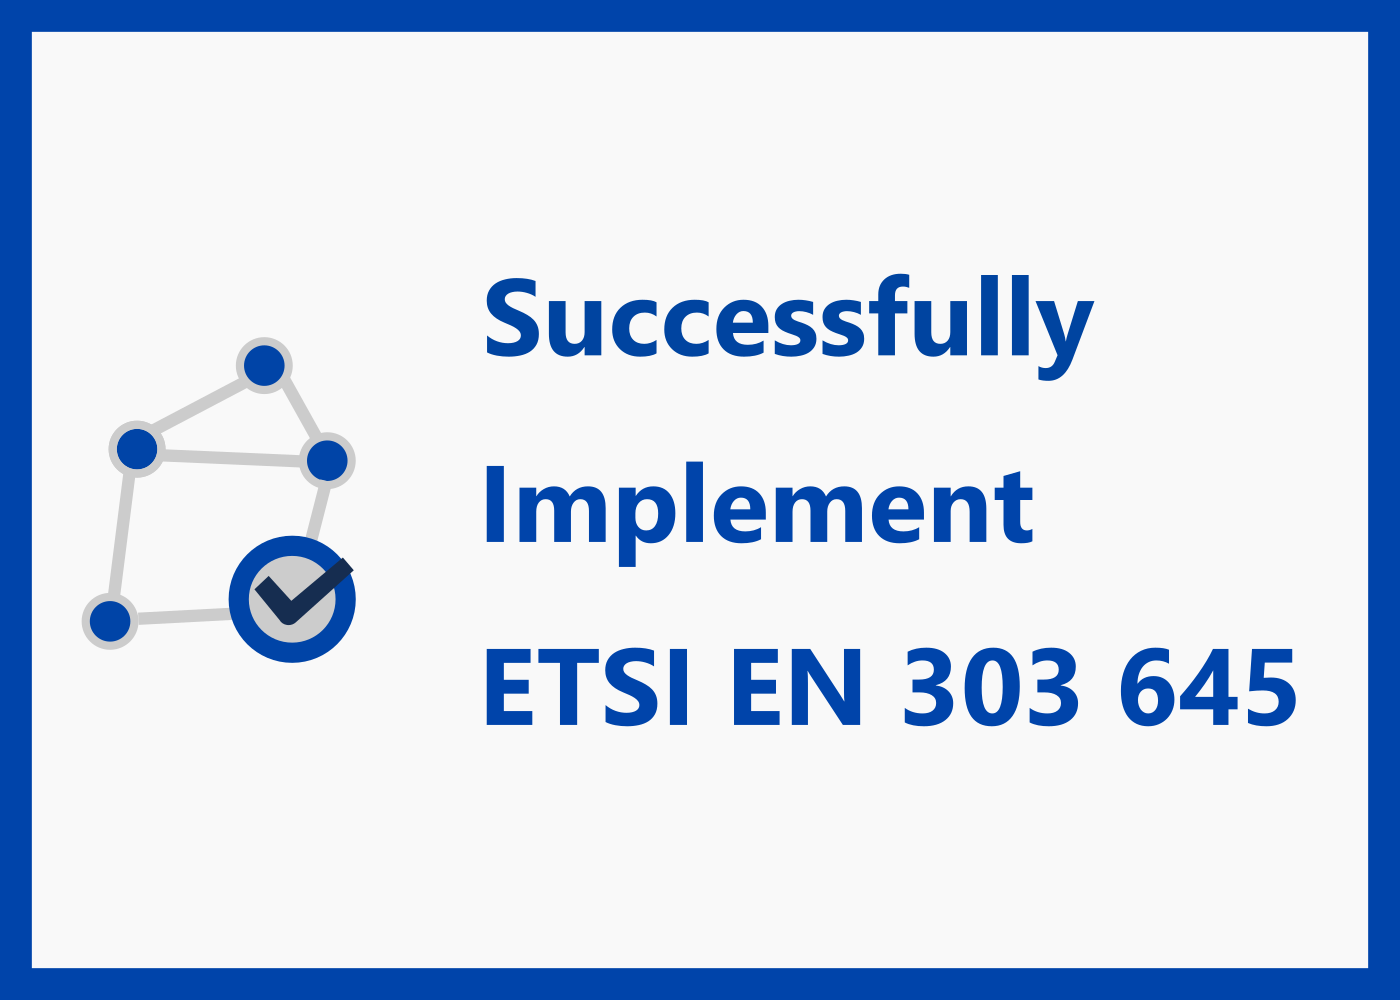 Implémenter ETSI EN 303 645 avec succès